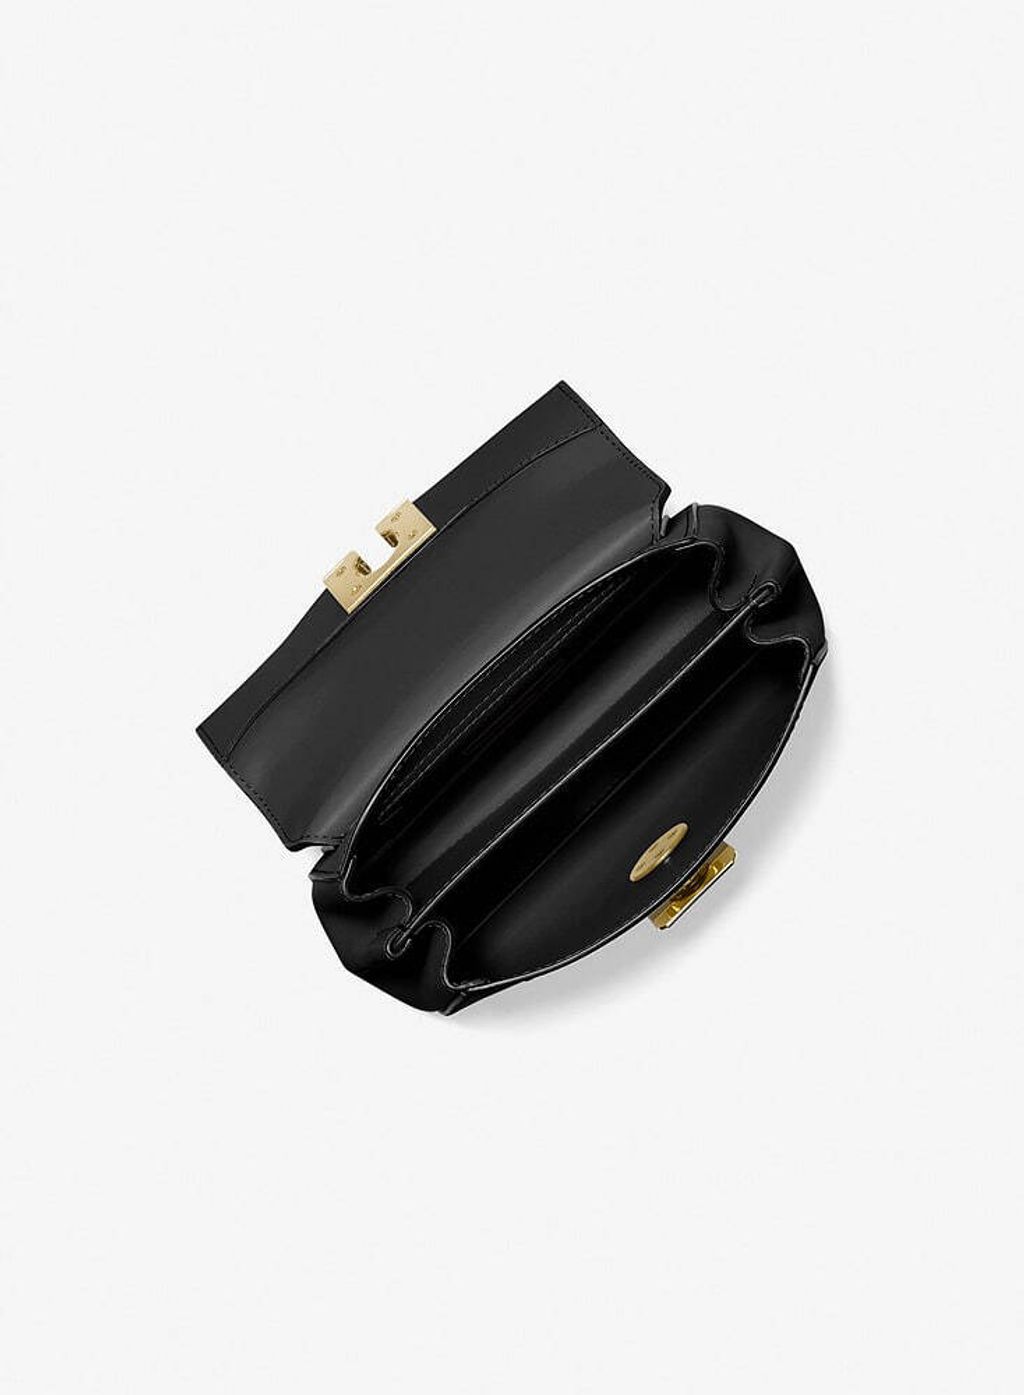 handbag branded coach outlet personalshopper usa malaysia ready stock  MICHAEL KORS LITA SMALL 1